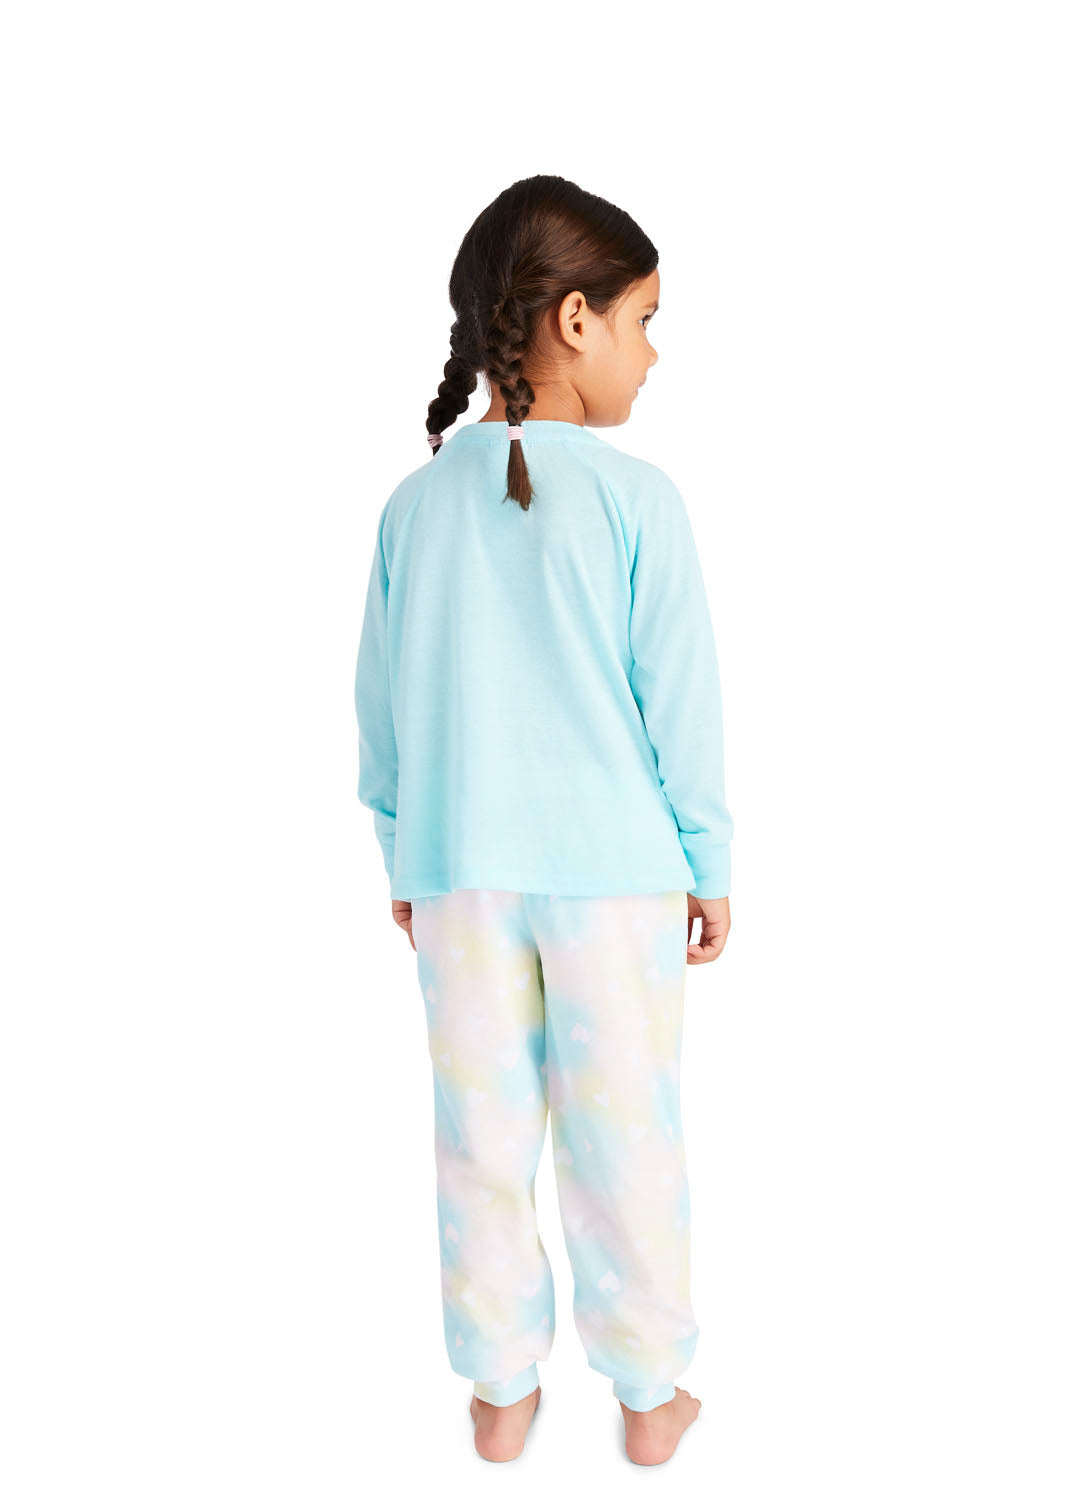 Back view Little girl wearing pajama set with Unicorn print